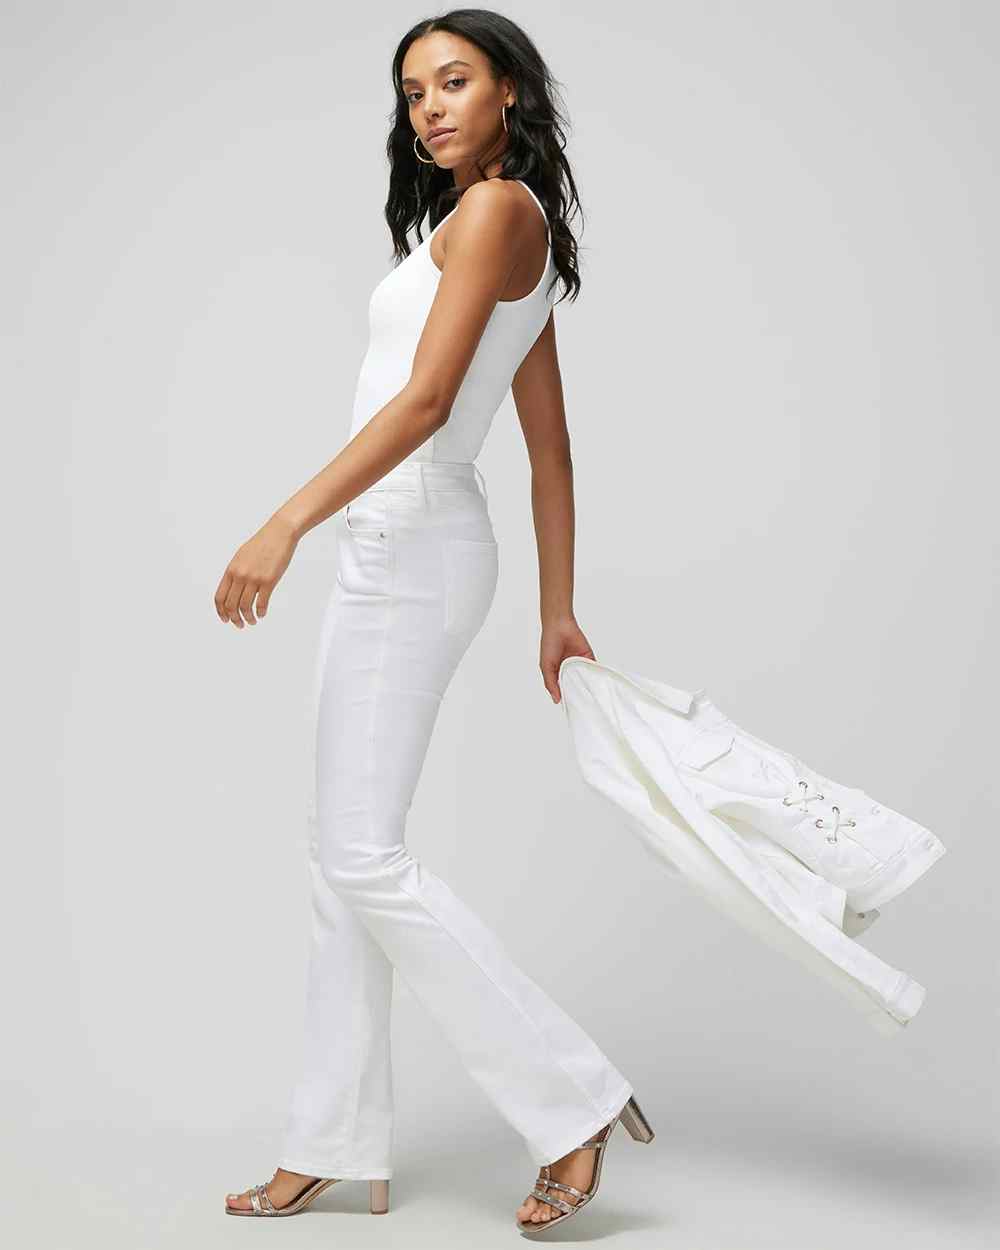 Shop New Women's Jeans & Denim: New Arrivals | White House Black Market